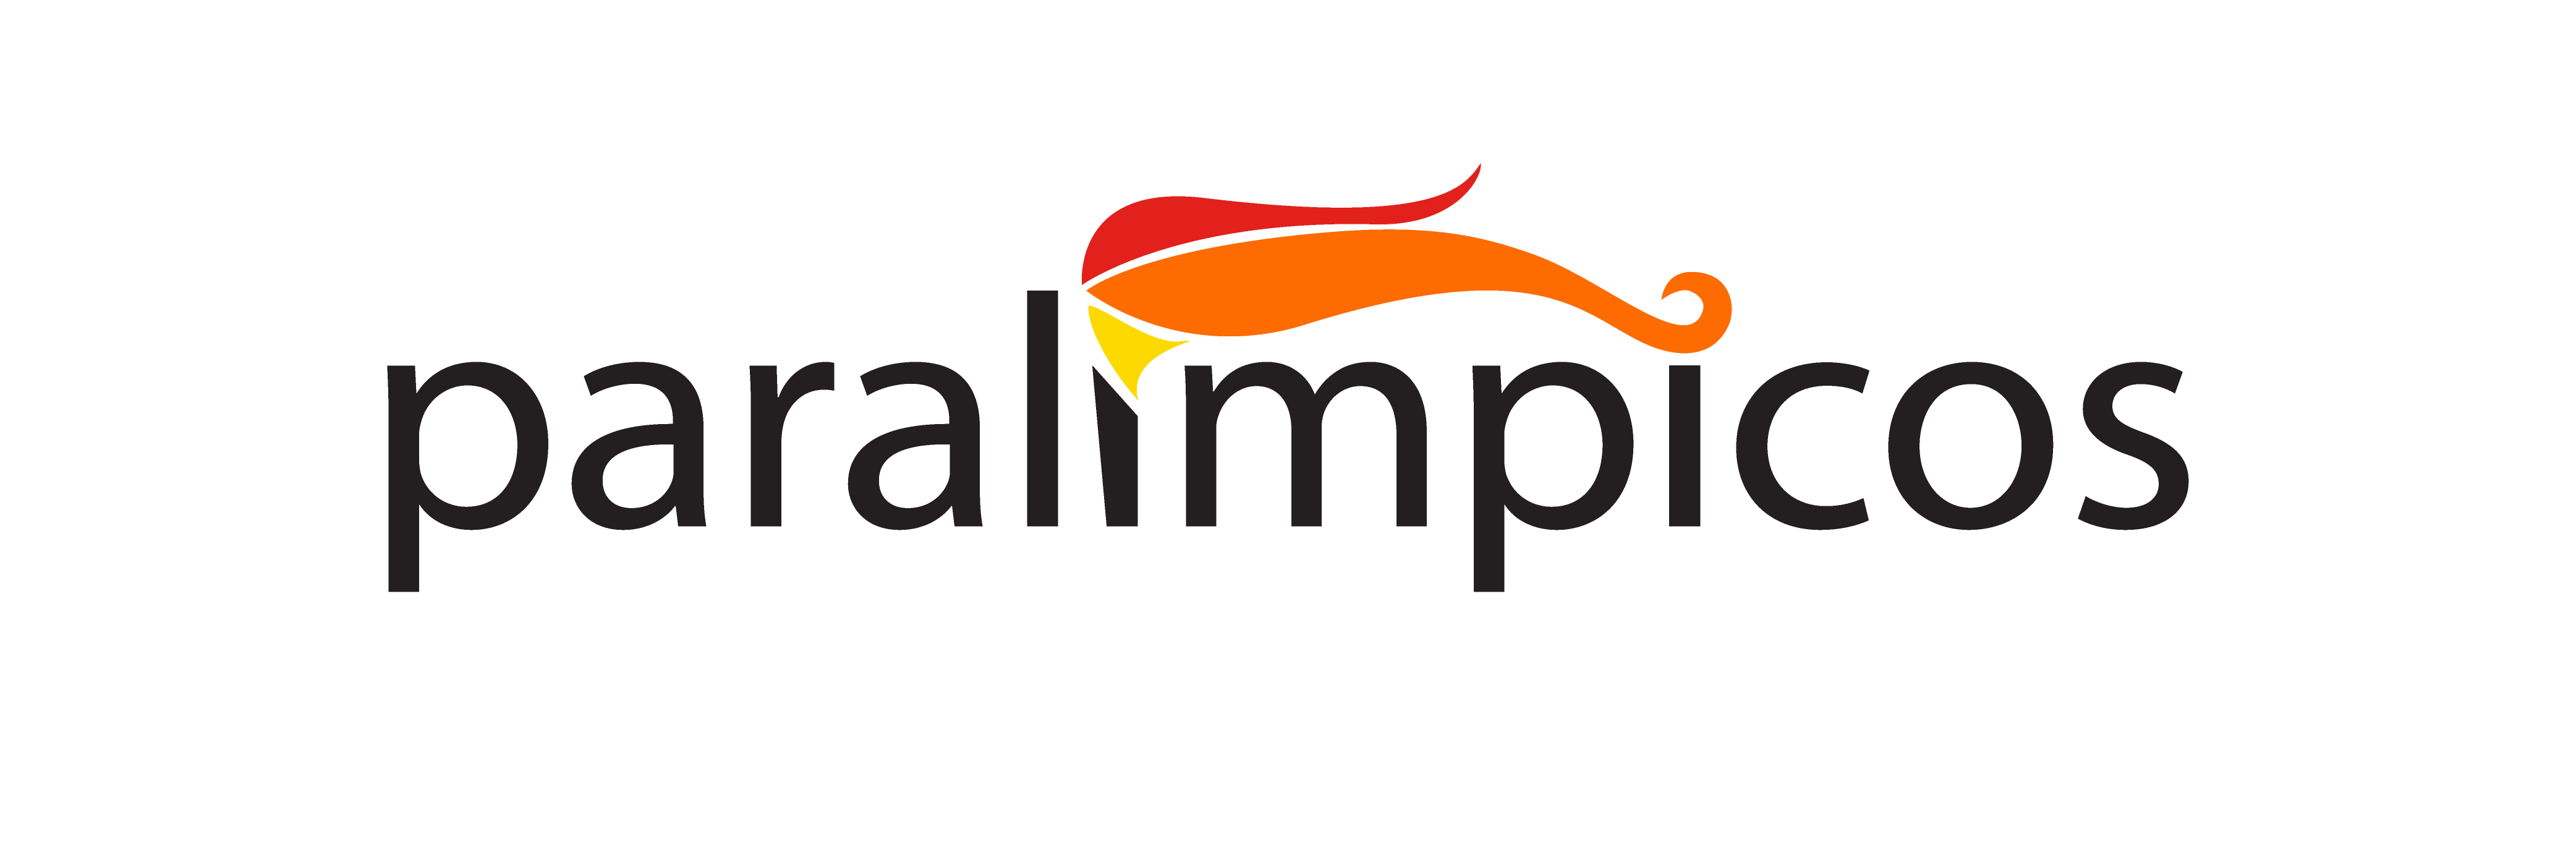 1 - Logo Paralimpicos